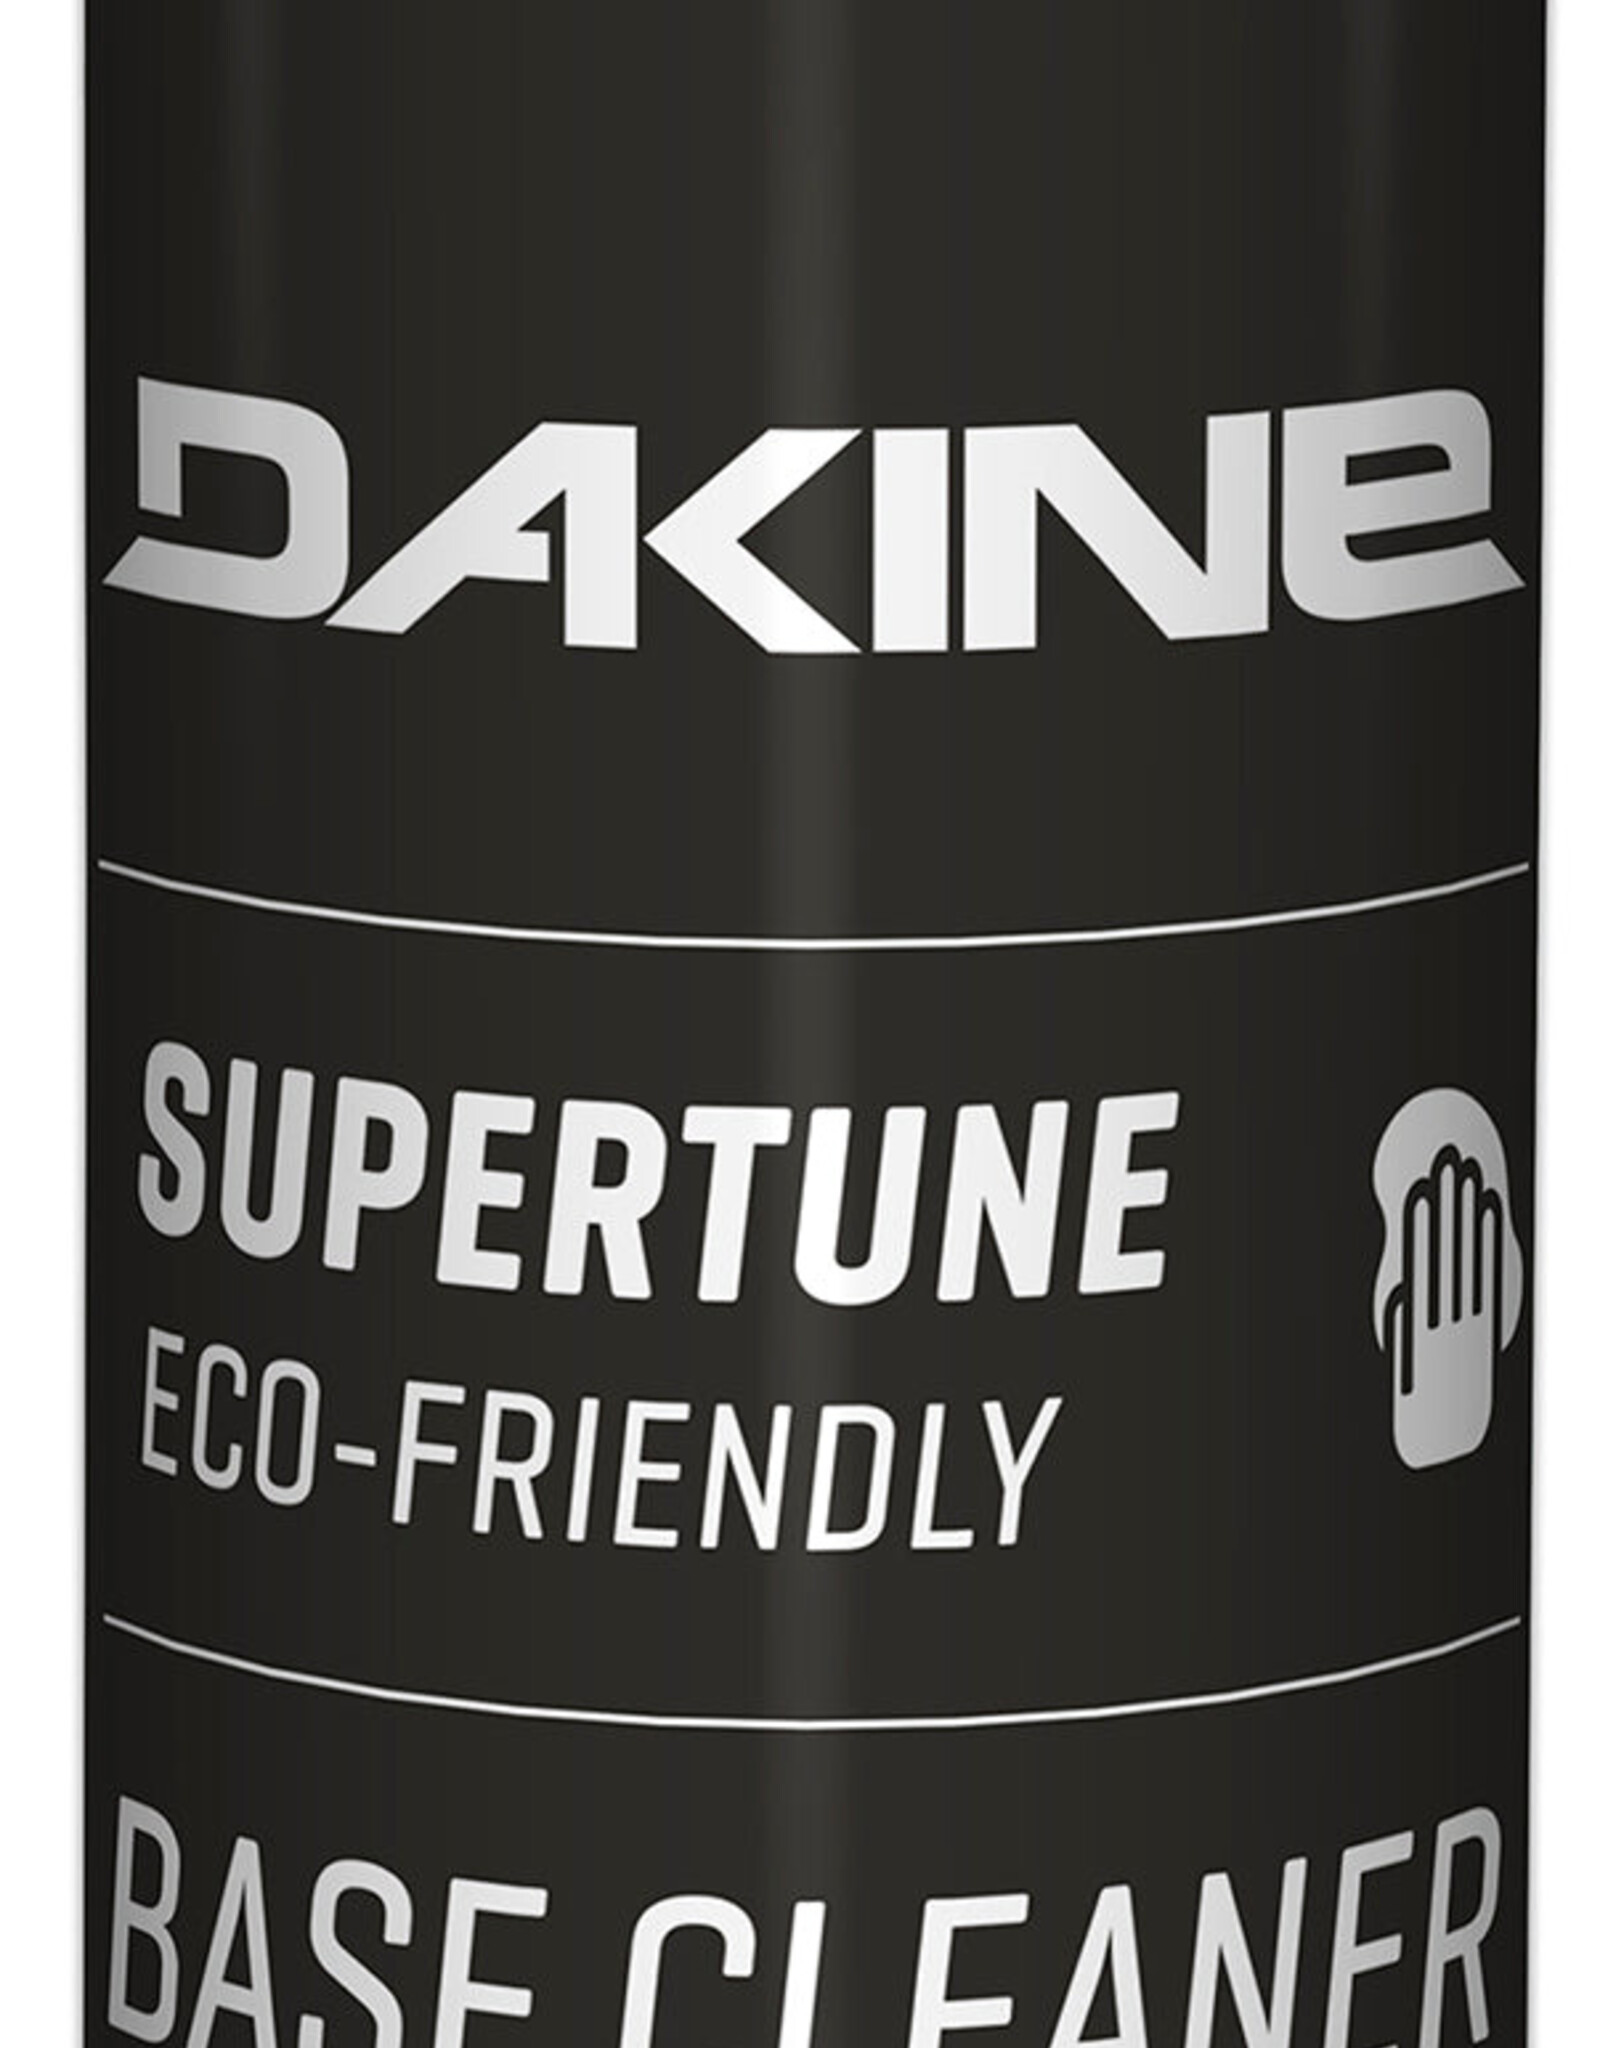 DAKINE - SUPERTUNE ECO FRIENDLY BASE CLEANER 8OZ